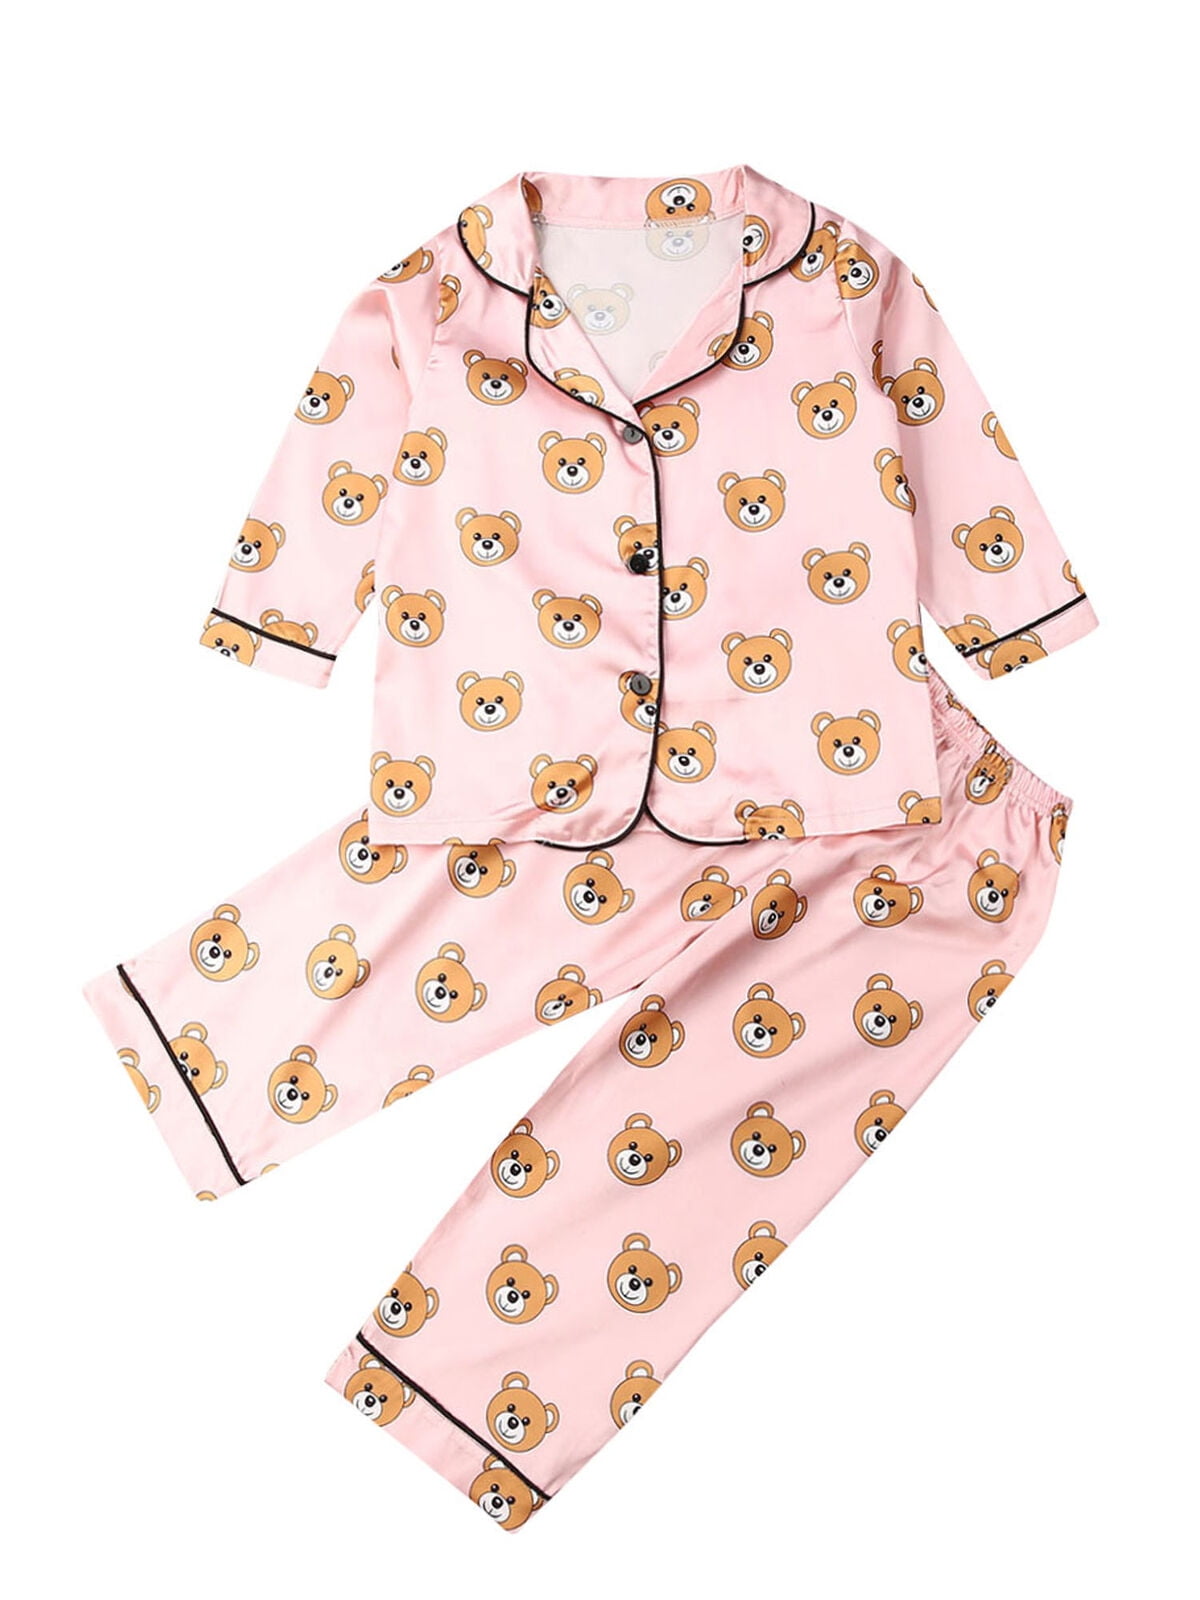 Girls Silk Satin Pajamas Pyjamas Kids Children Sleepwear Set Nightwear 